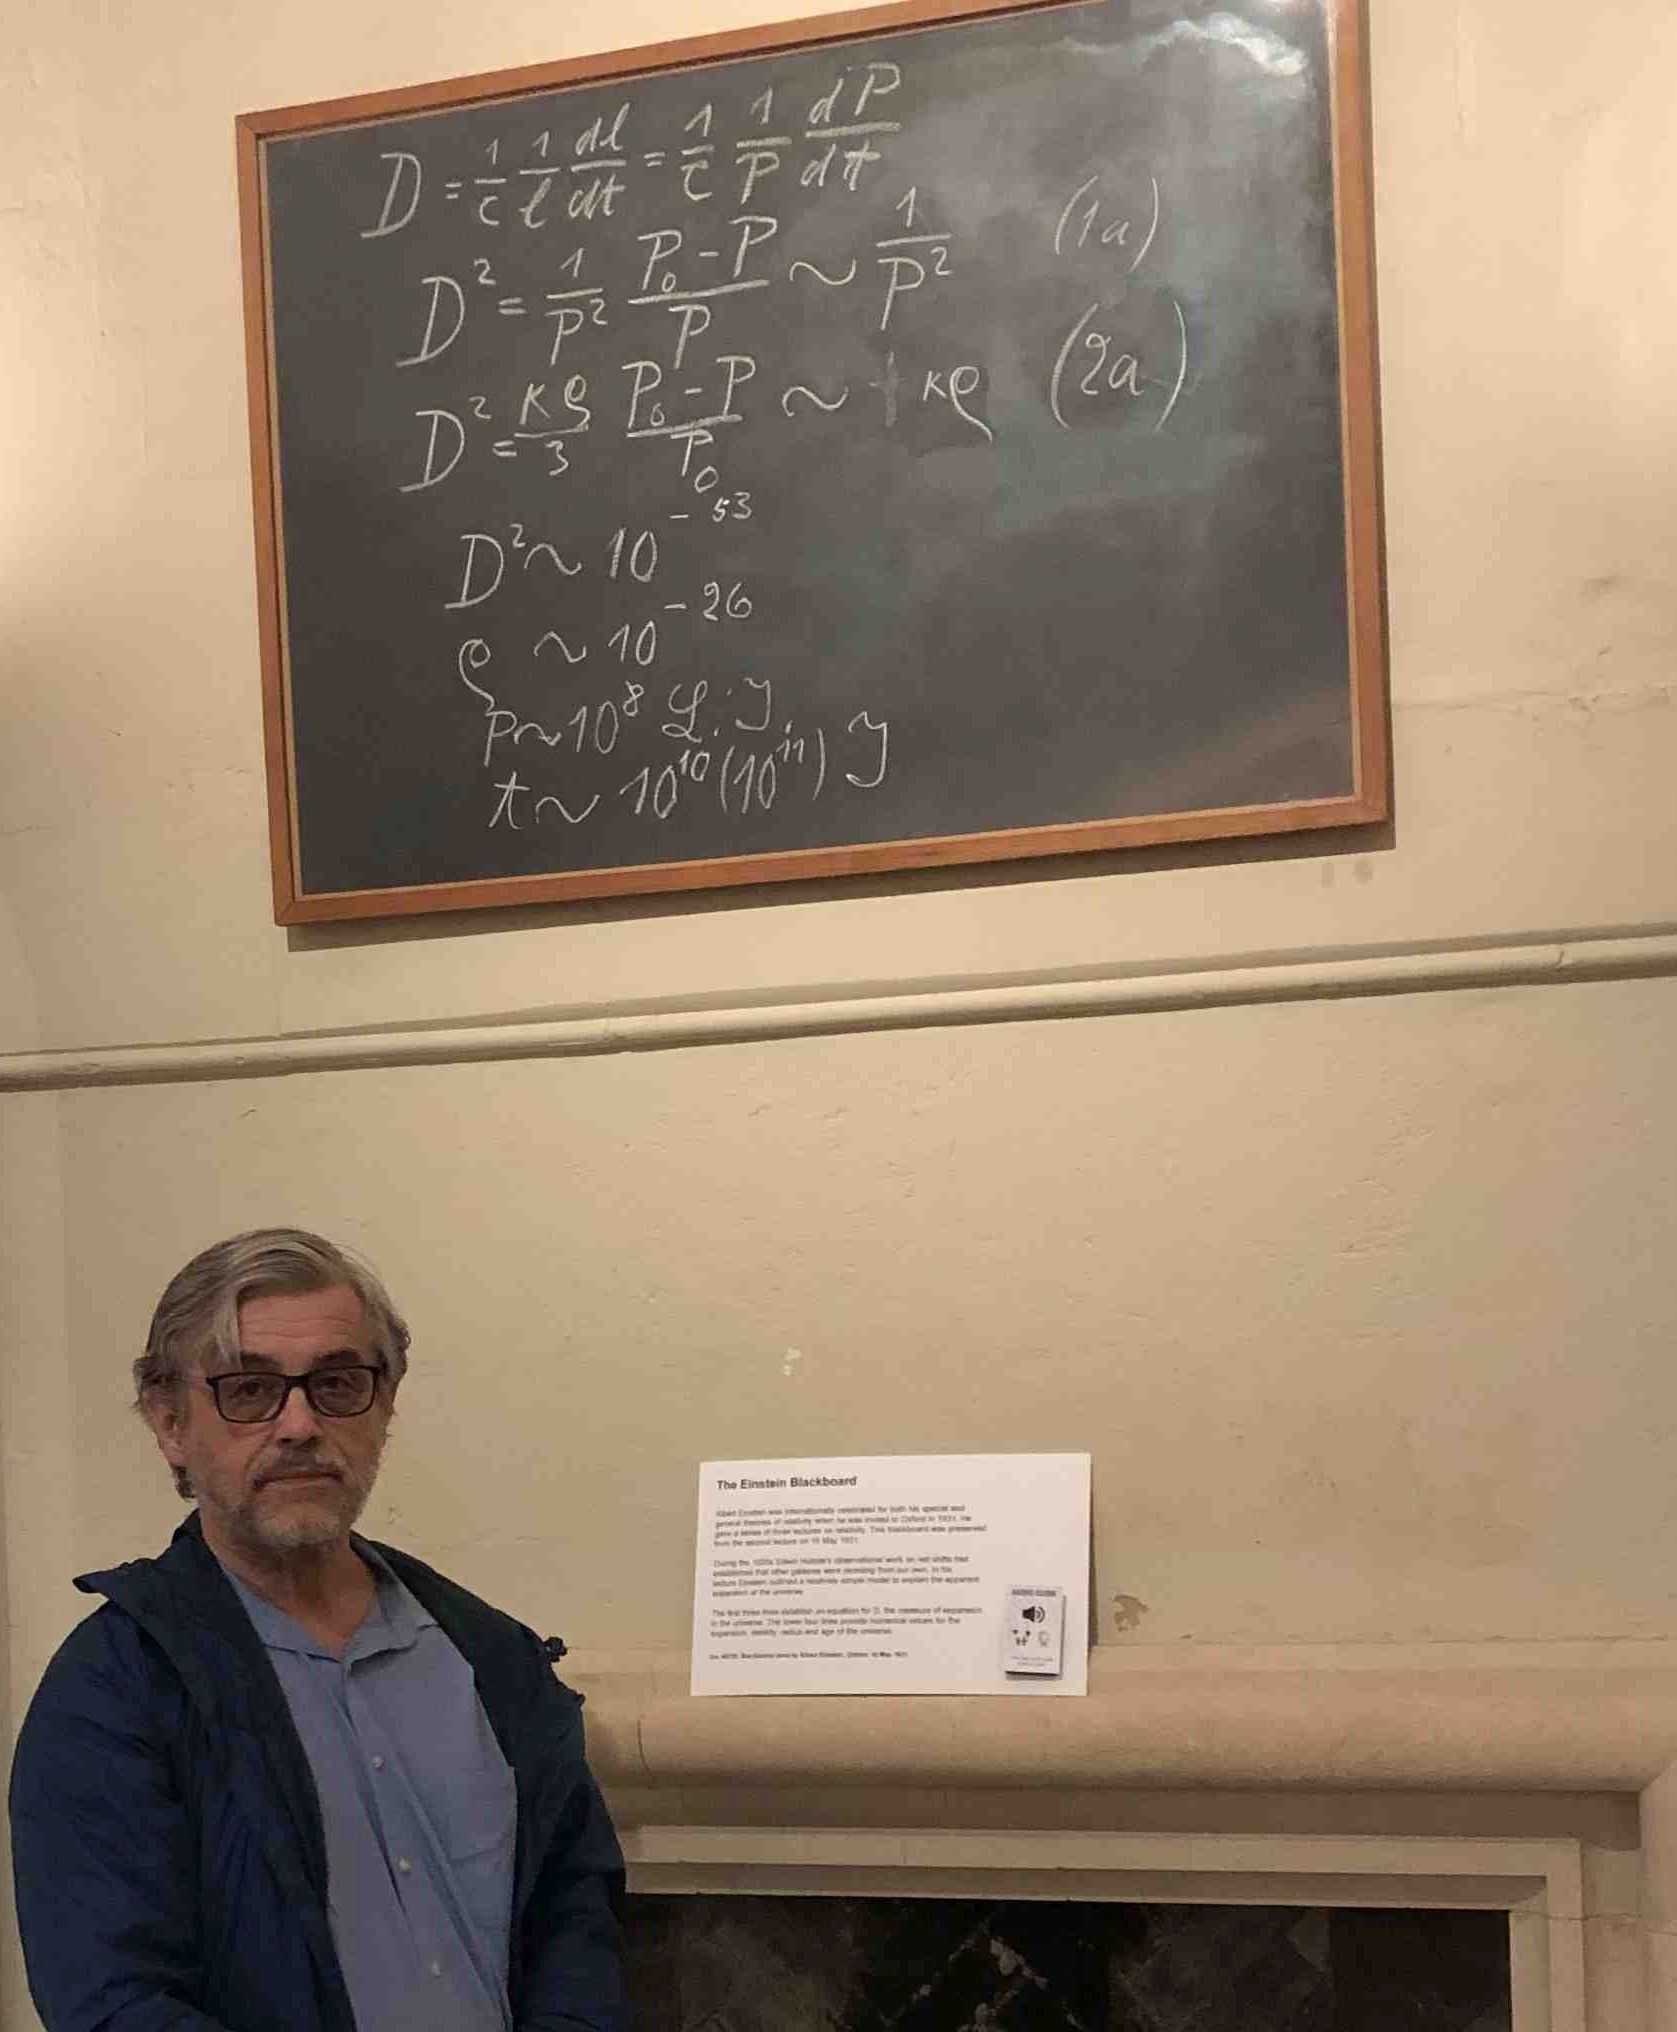 dwight at oxford in front of Einstein's chalkboard